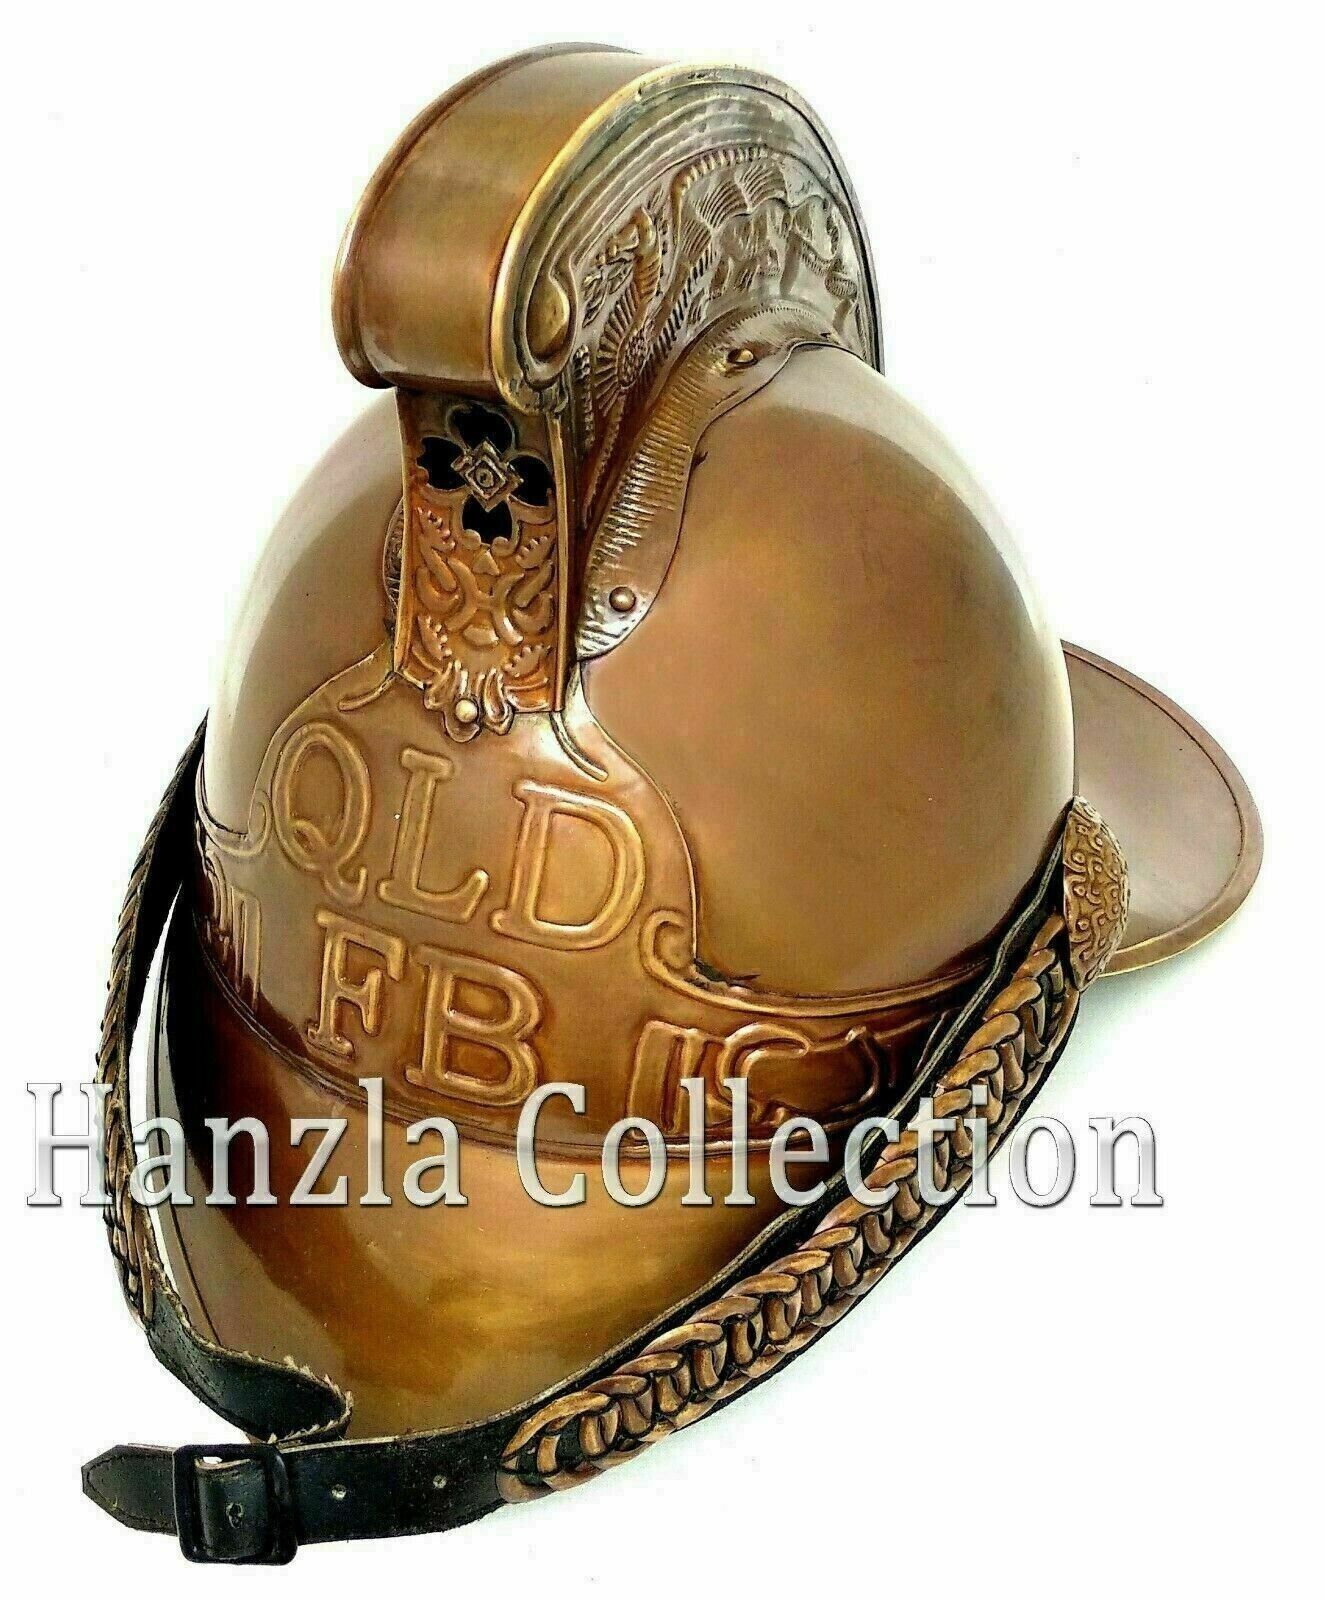 Antique British Fireman Helmet historical collectible British fireman helmet